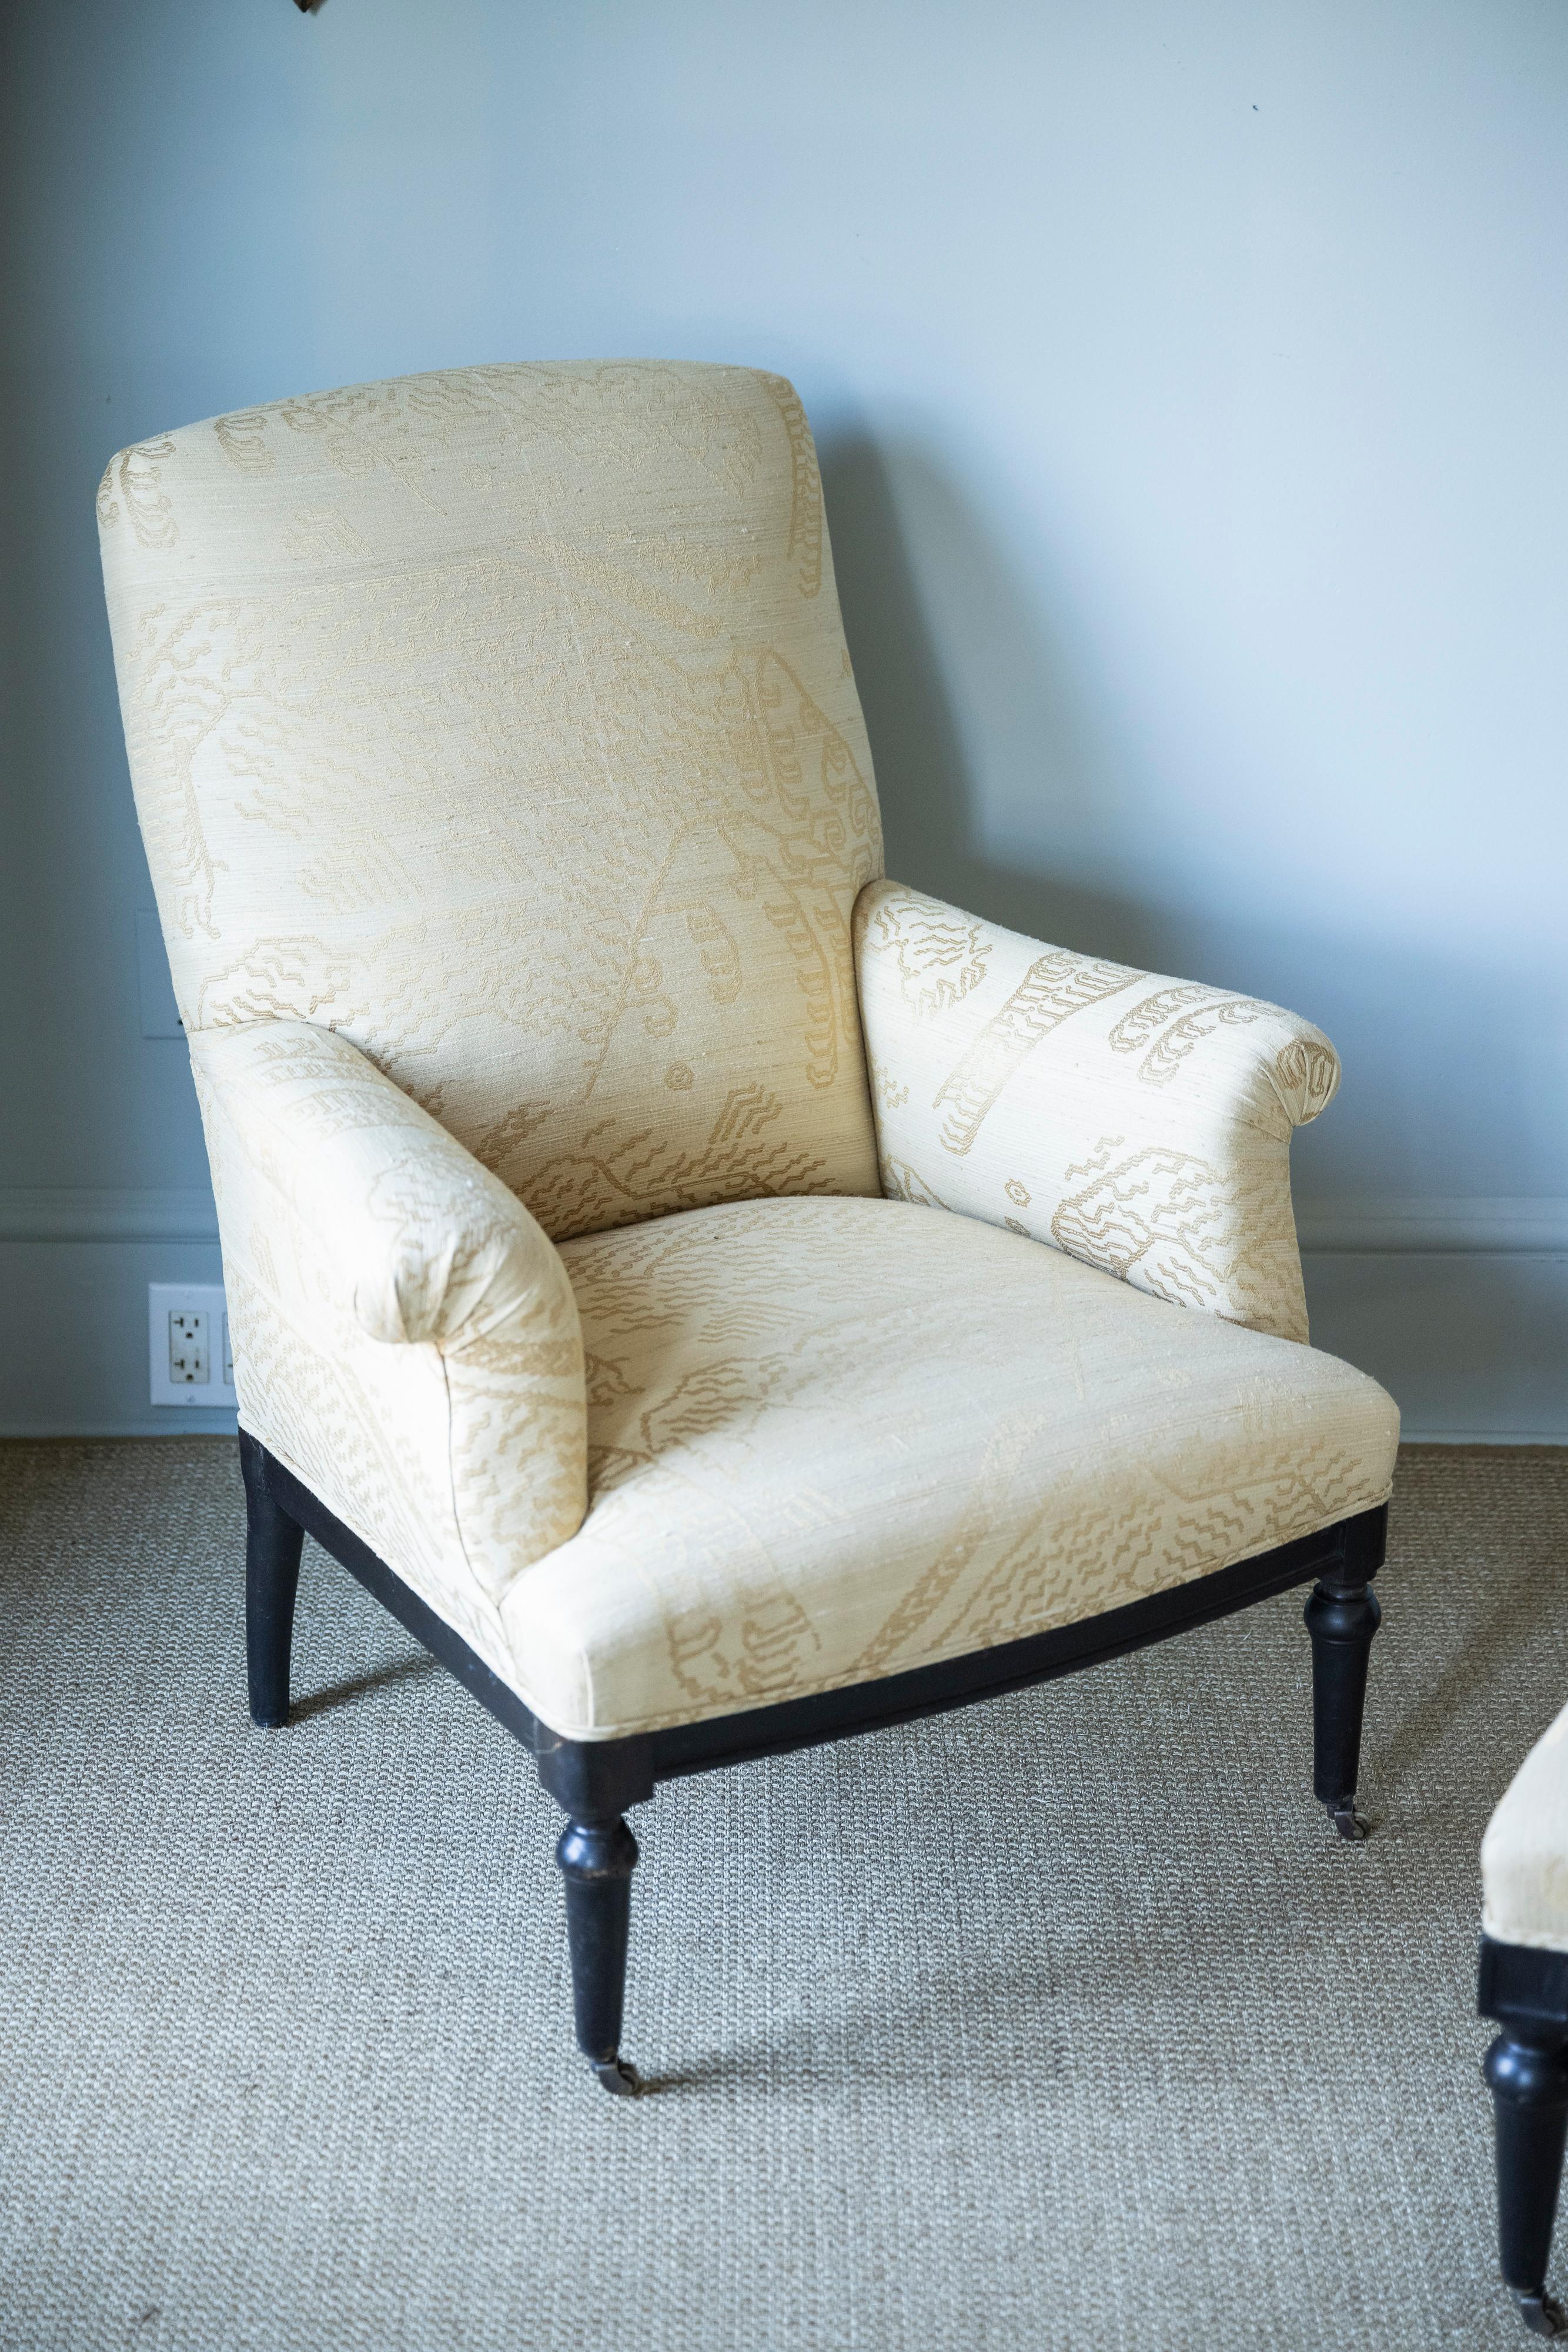 Reupholstered in Dedar silk

Chair: 32